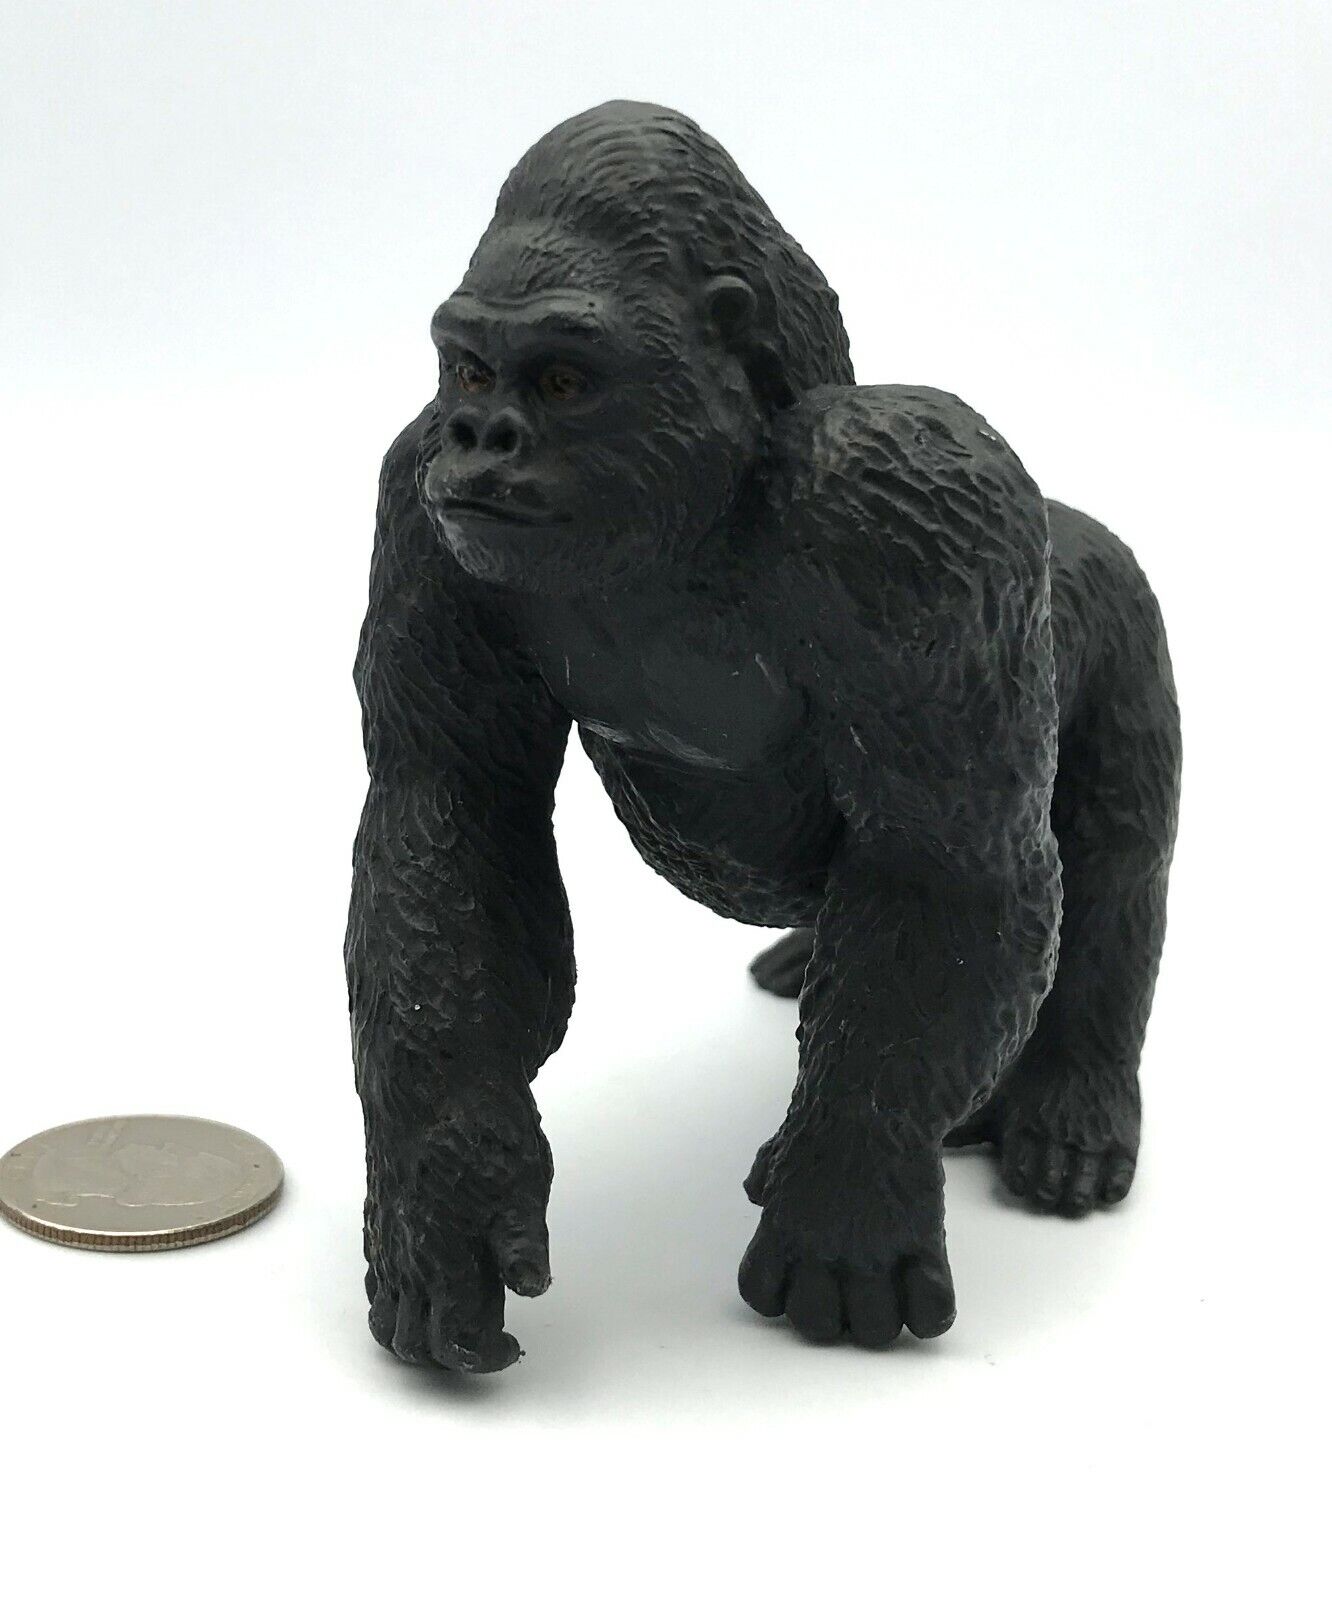 Safari Ltd Male Gorilla Silverback Adult 2005 Ape Animal Figure